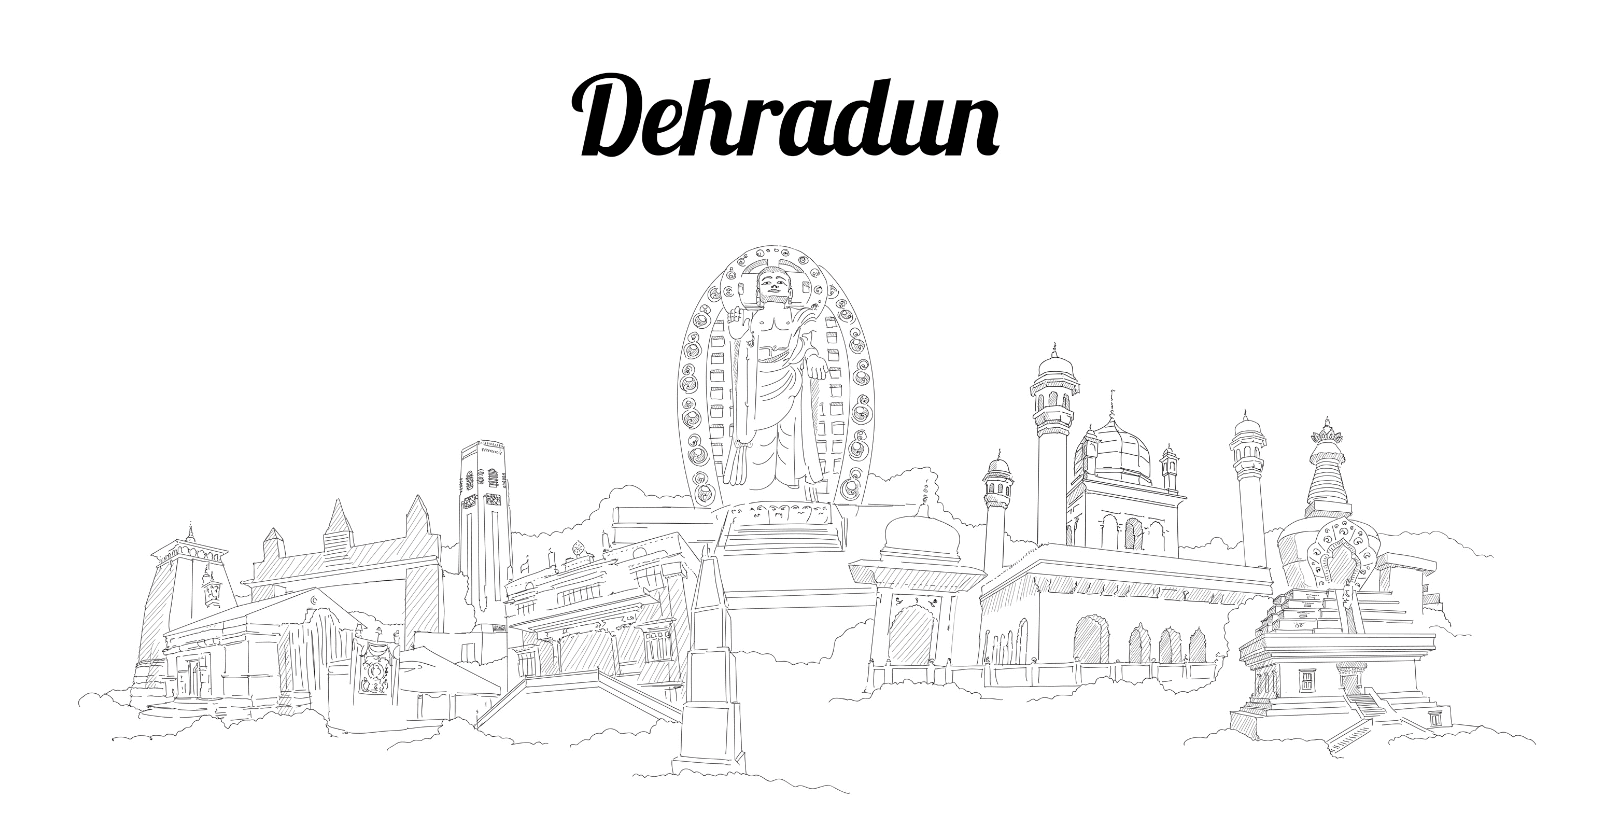 Driving Licence in Dehradun: How to Apply Online/Offline